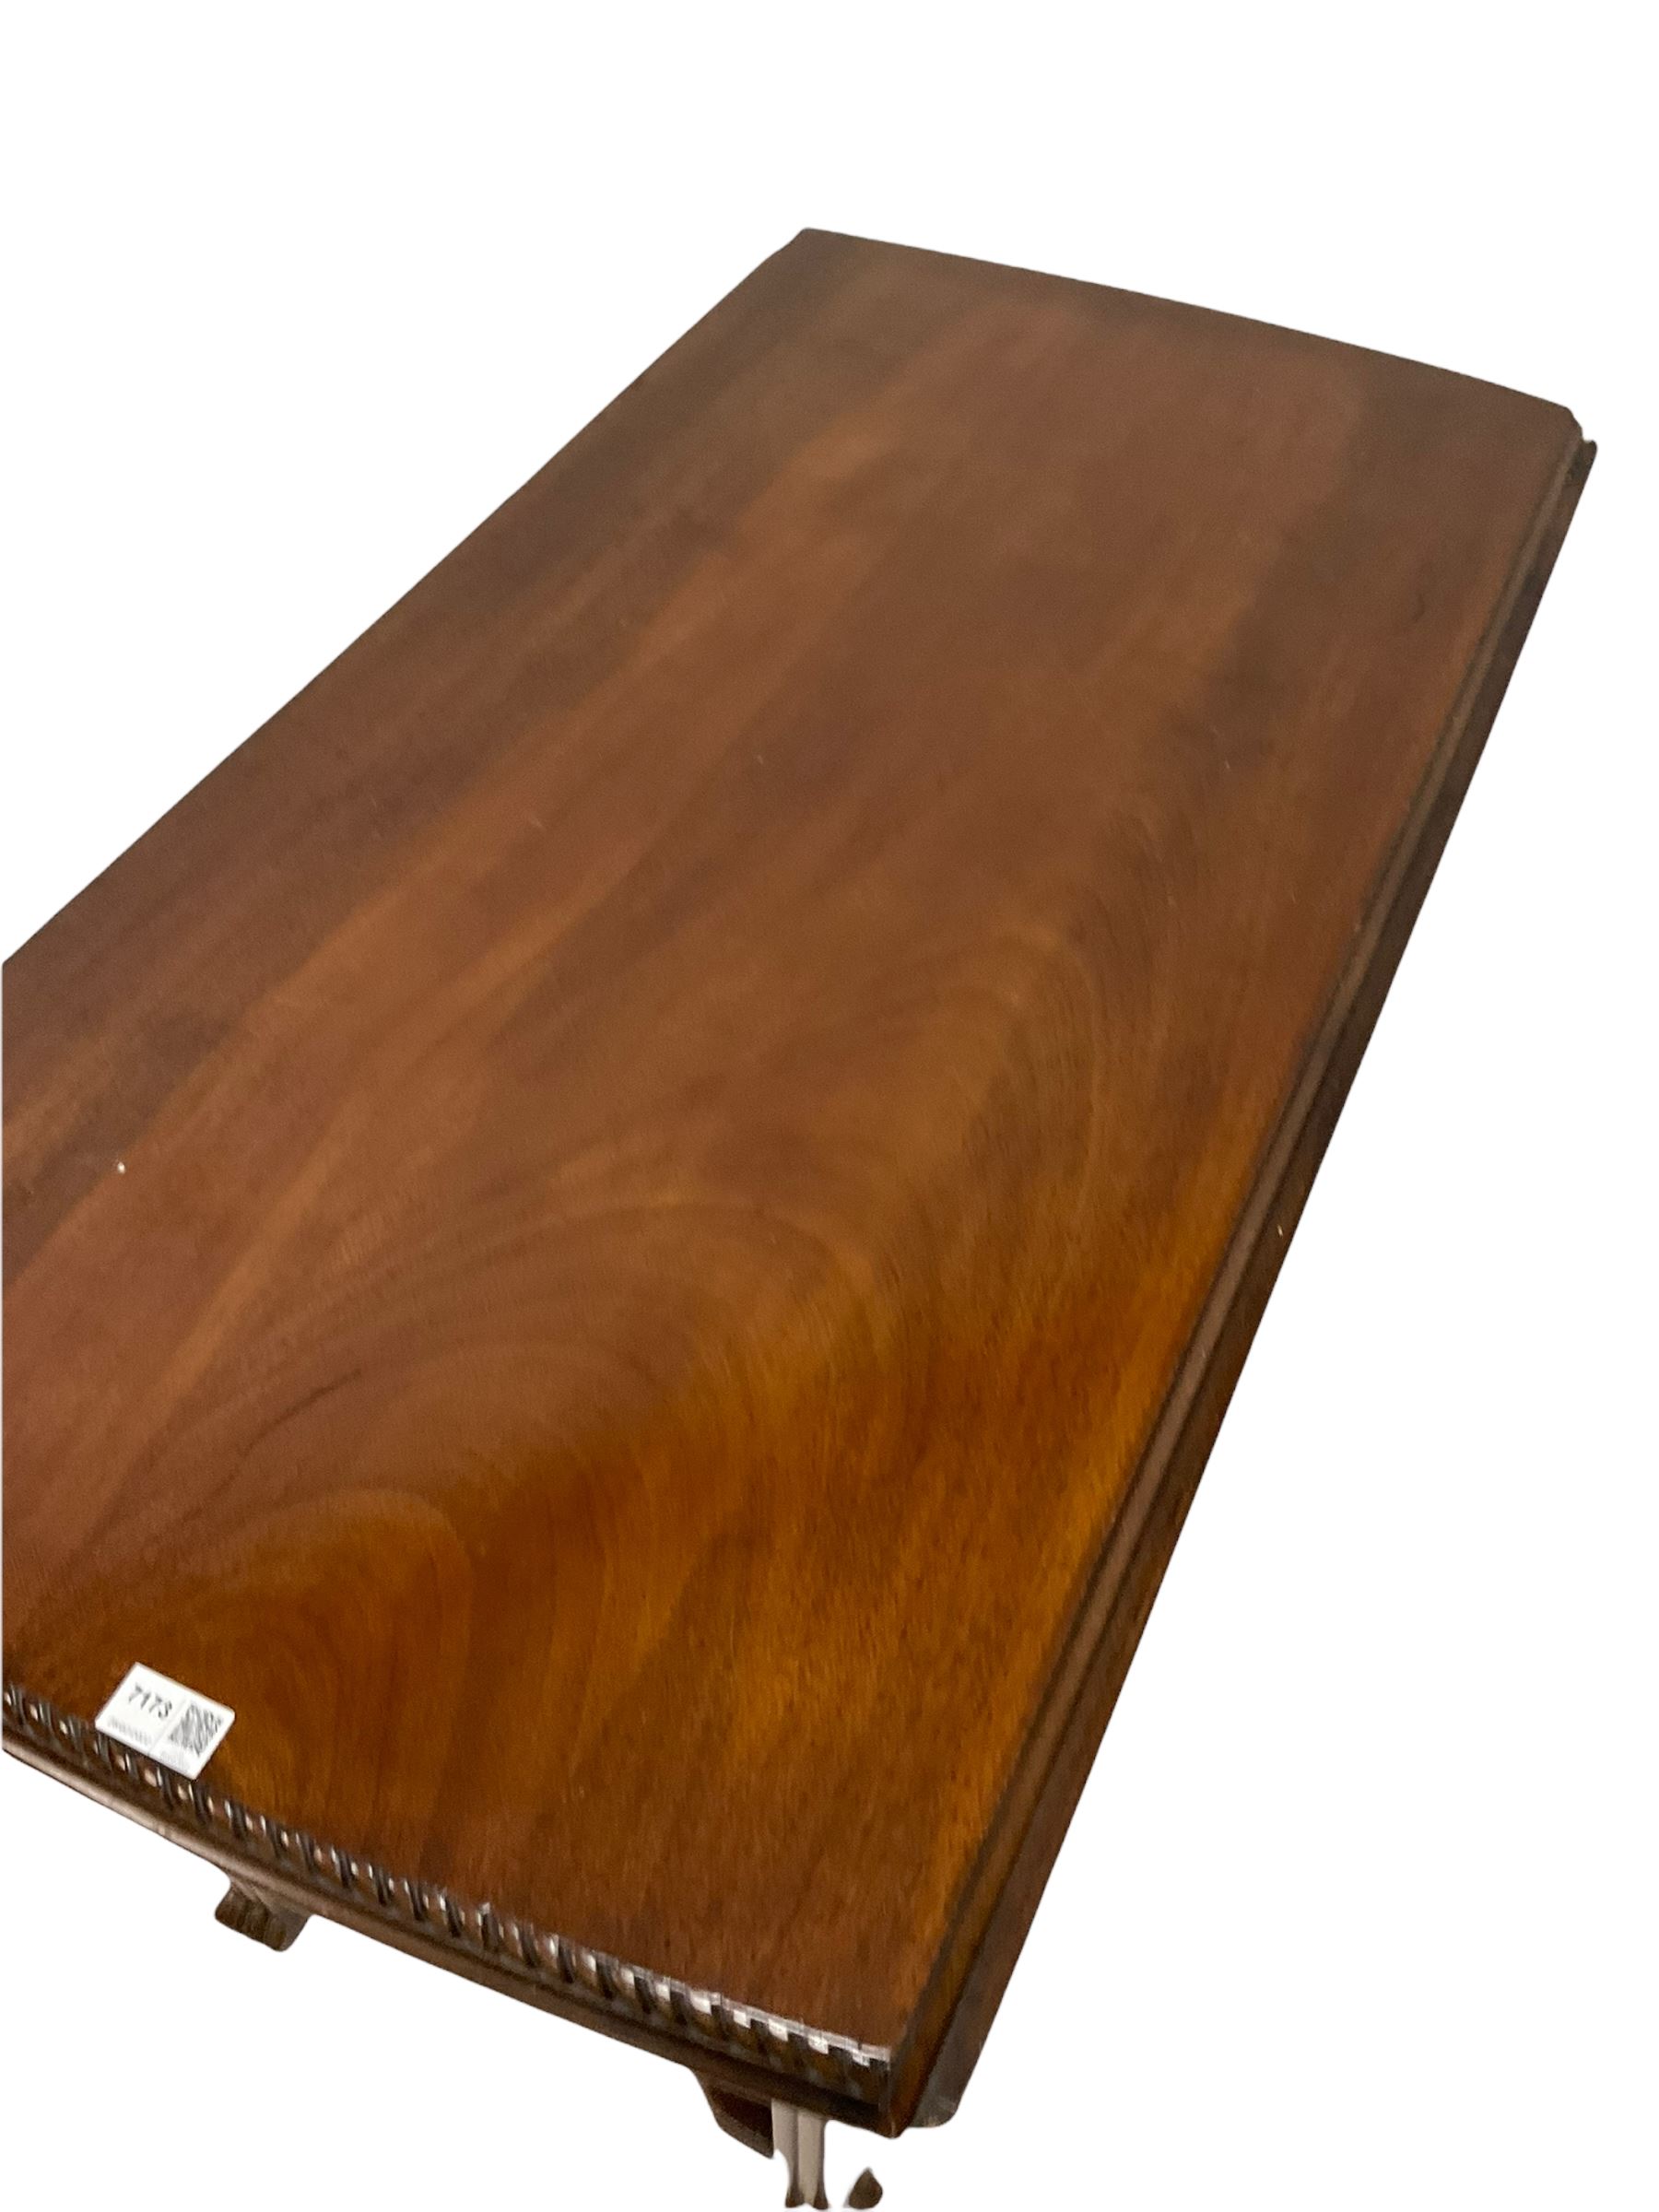 20th century mahogany drop leaf table - Image 2 of 2